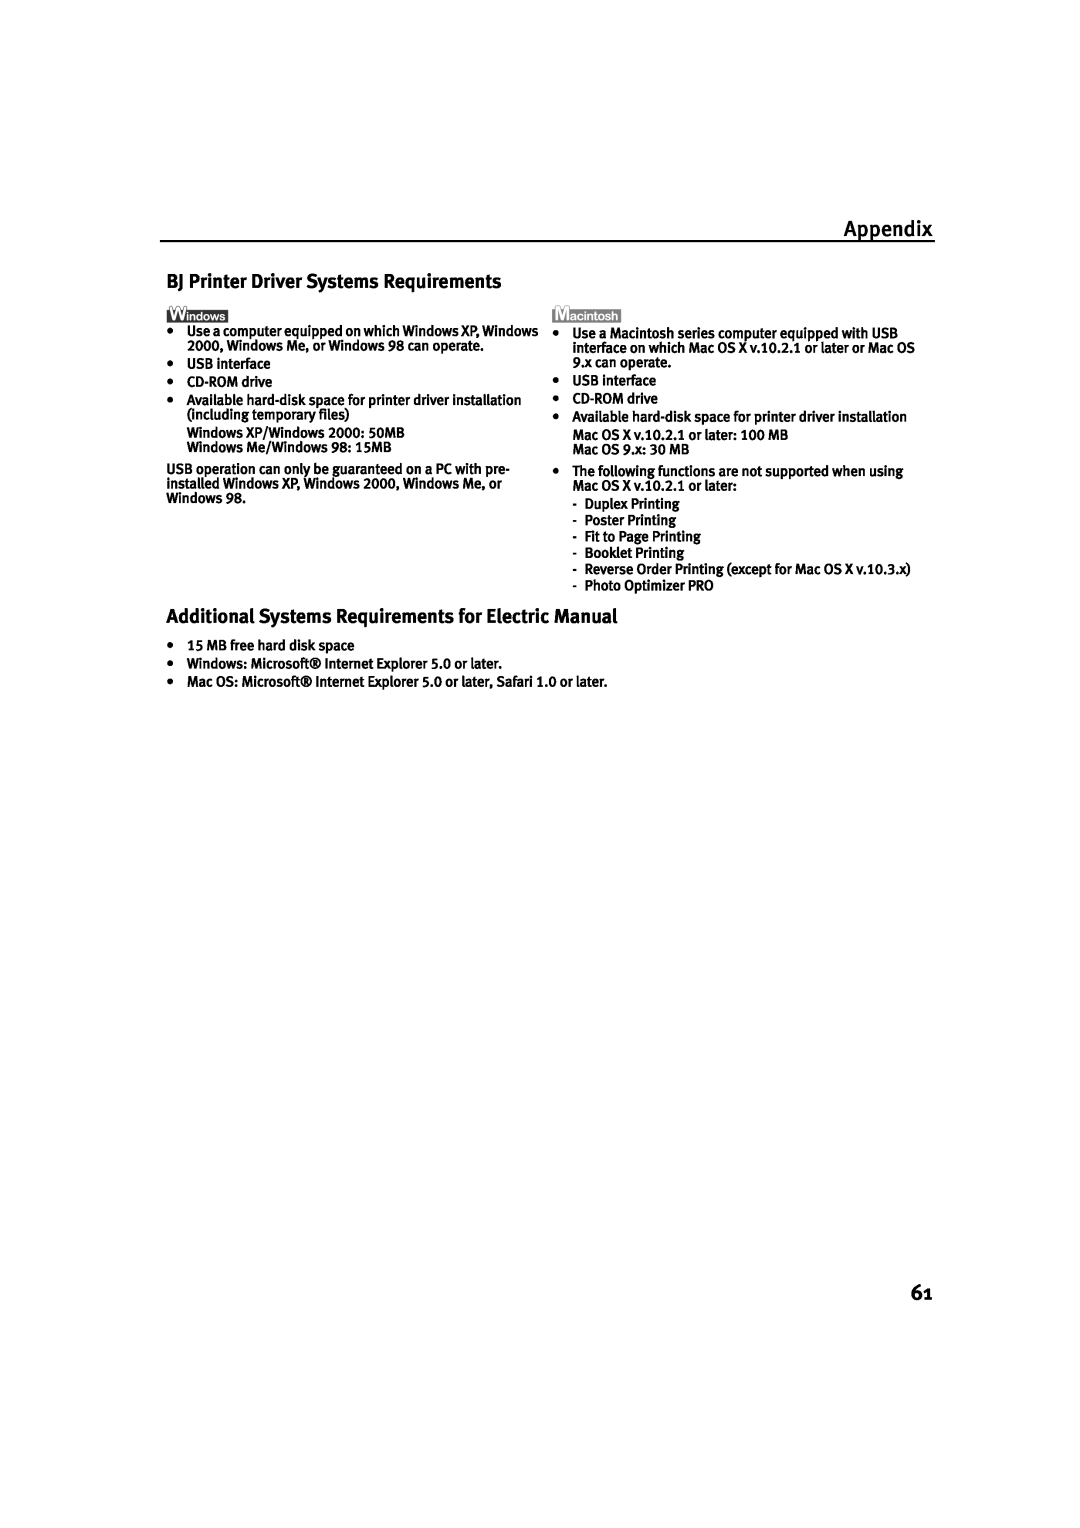 Canon IP1500 Appendix, BJ Printer Driver Systems Requirements, Additional Systems Requirements for Electric Manual 